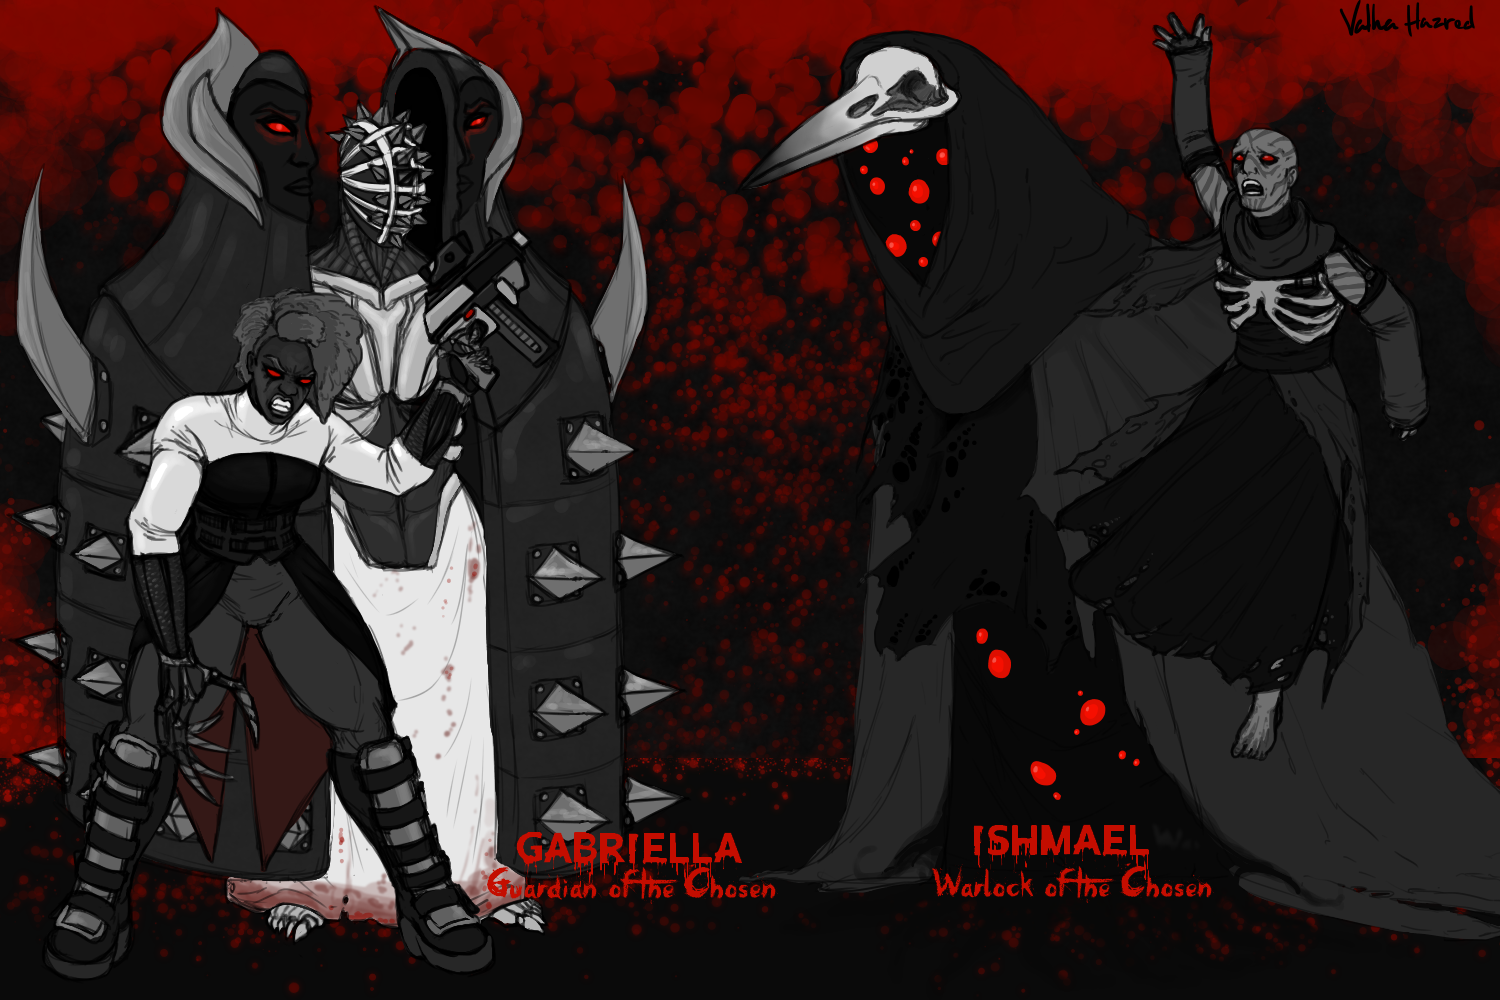 Blood 2 The Chosen Gabriella And Ishmael By Valhahazred On Deviantart